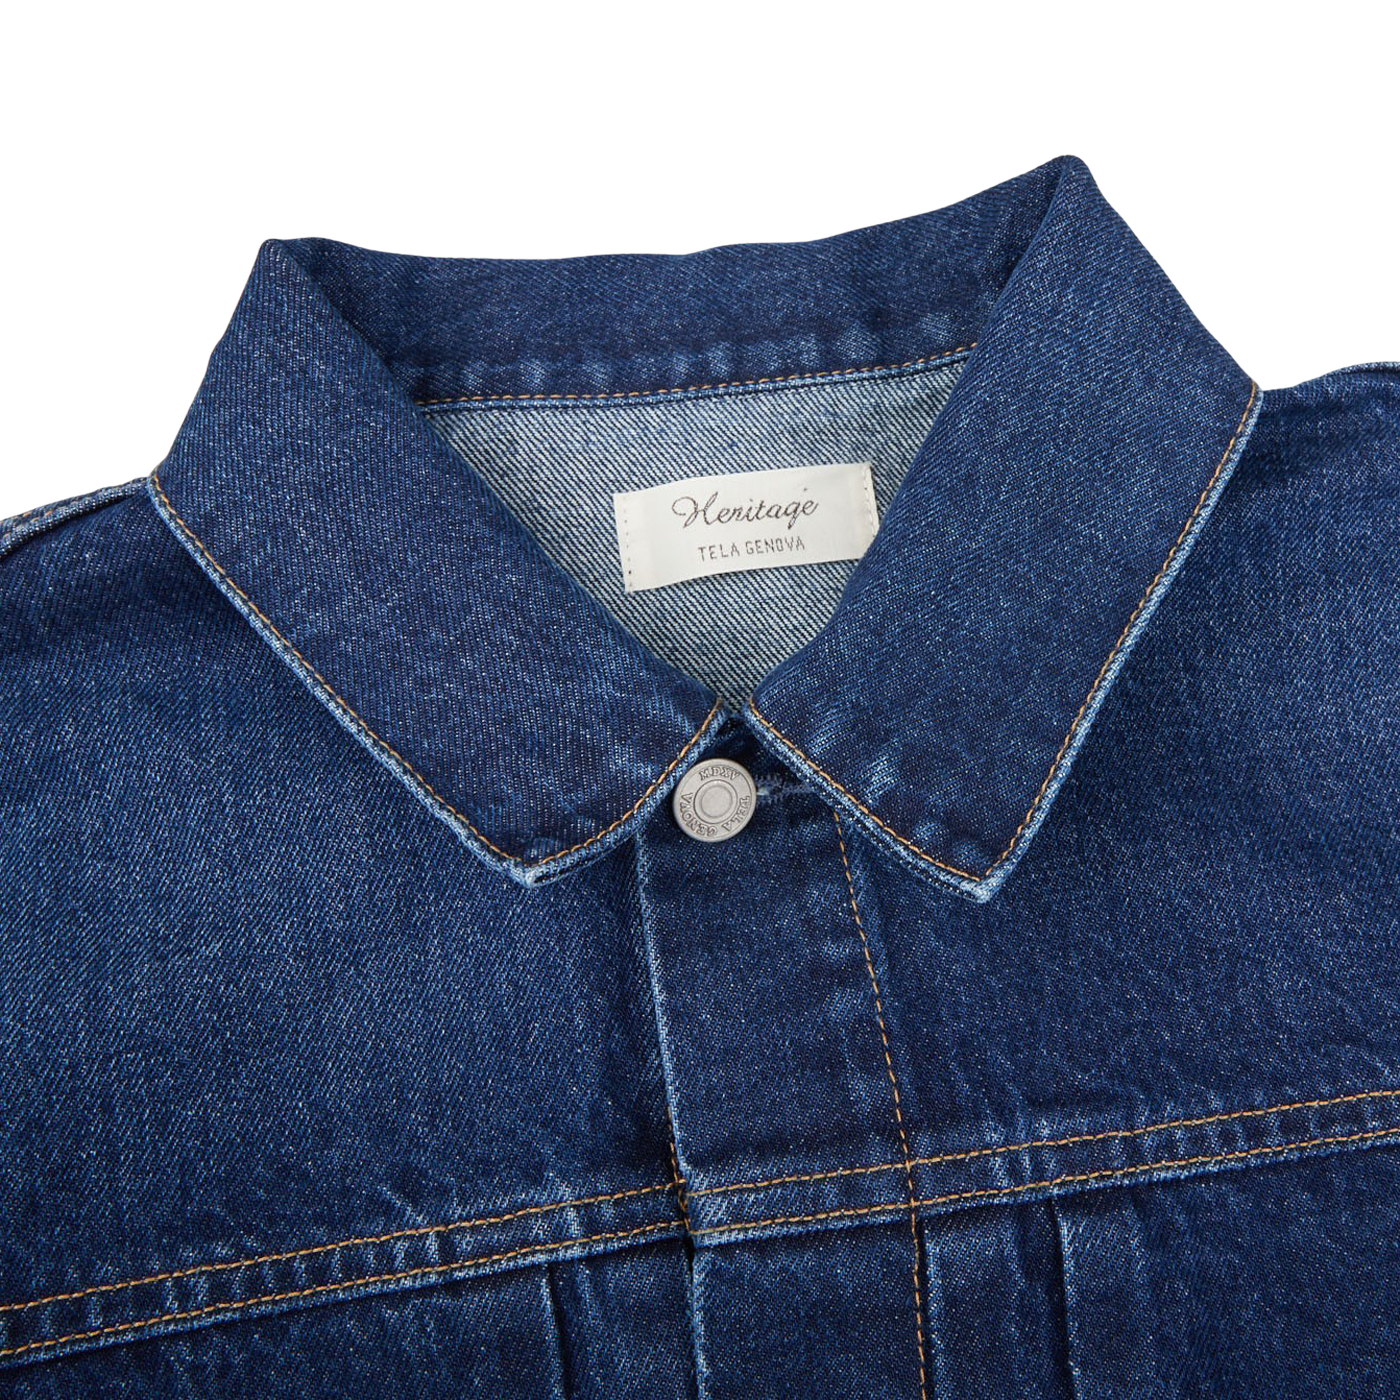 Tela Genova Washed Blue Cotton Selvedge Denim Jacket Collar